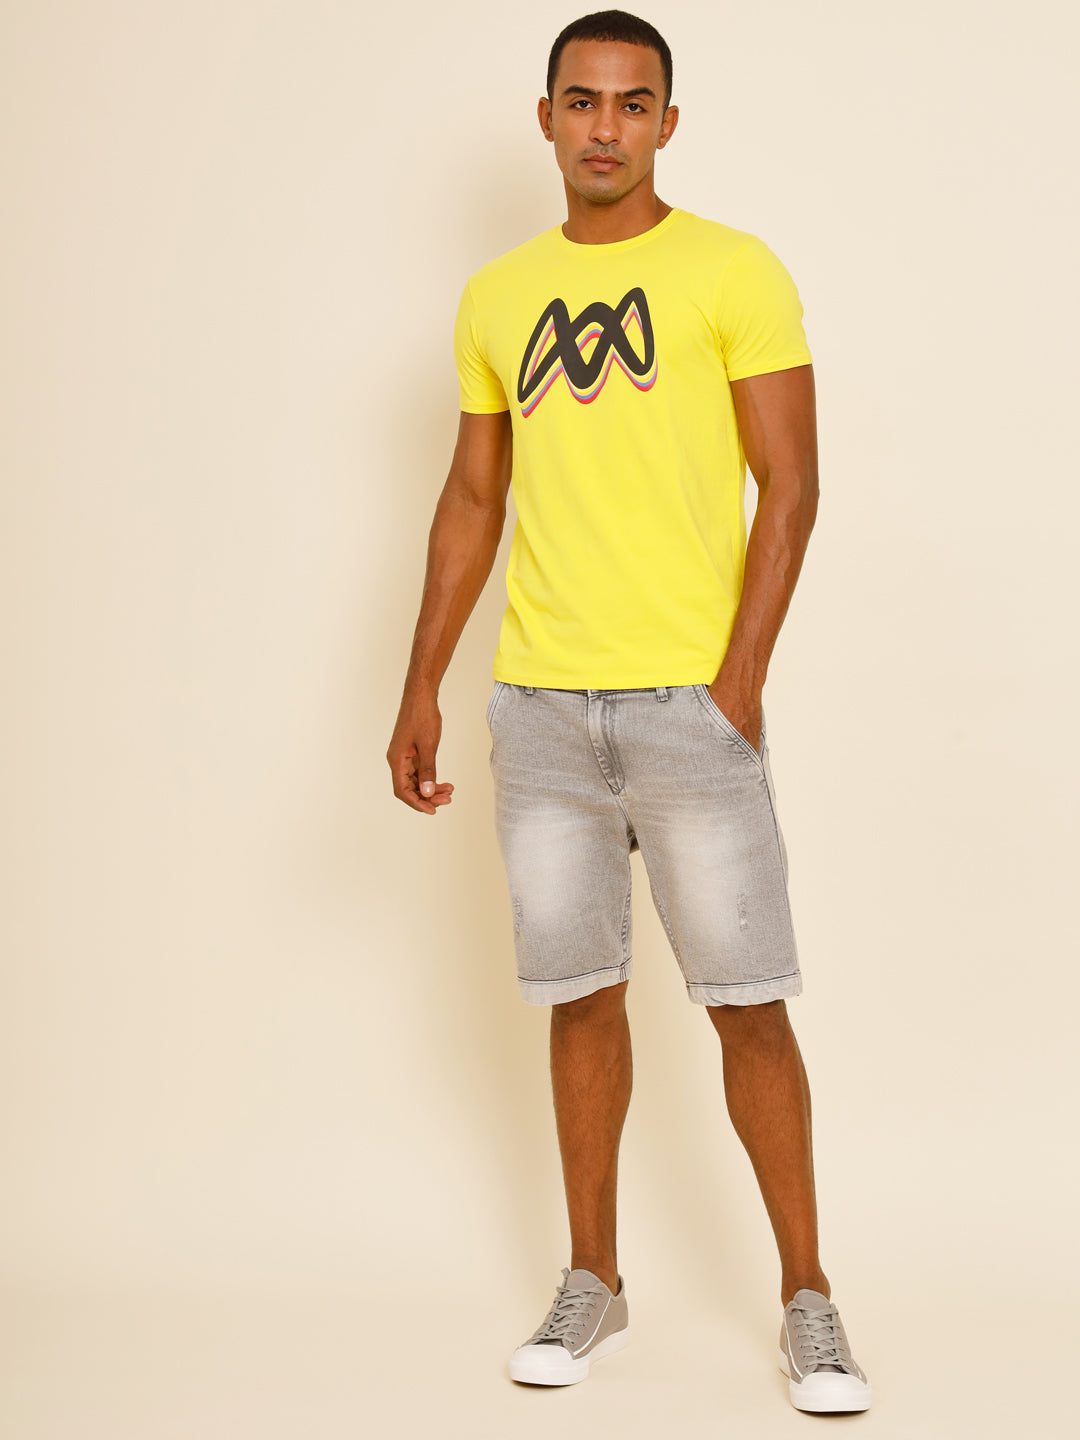 Muwin Yellow Printed T-shirt